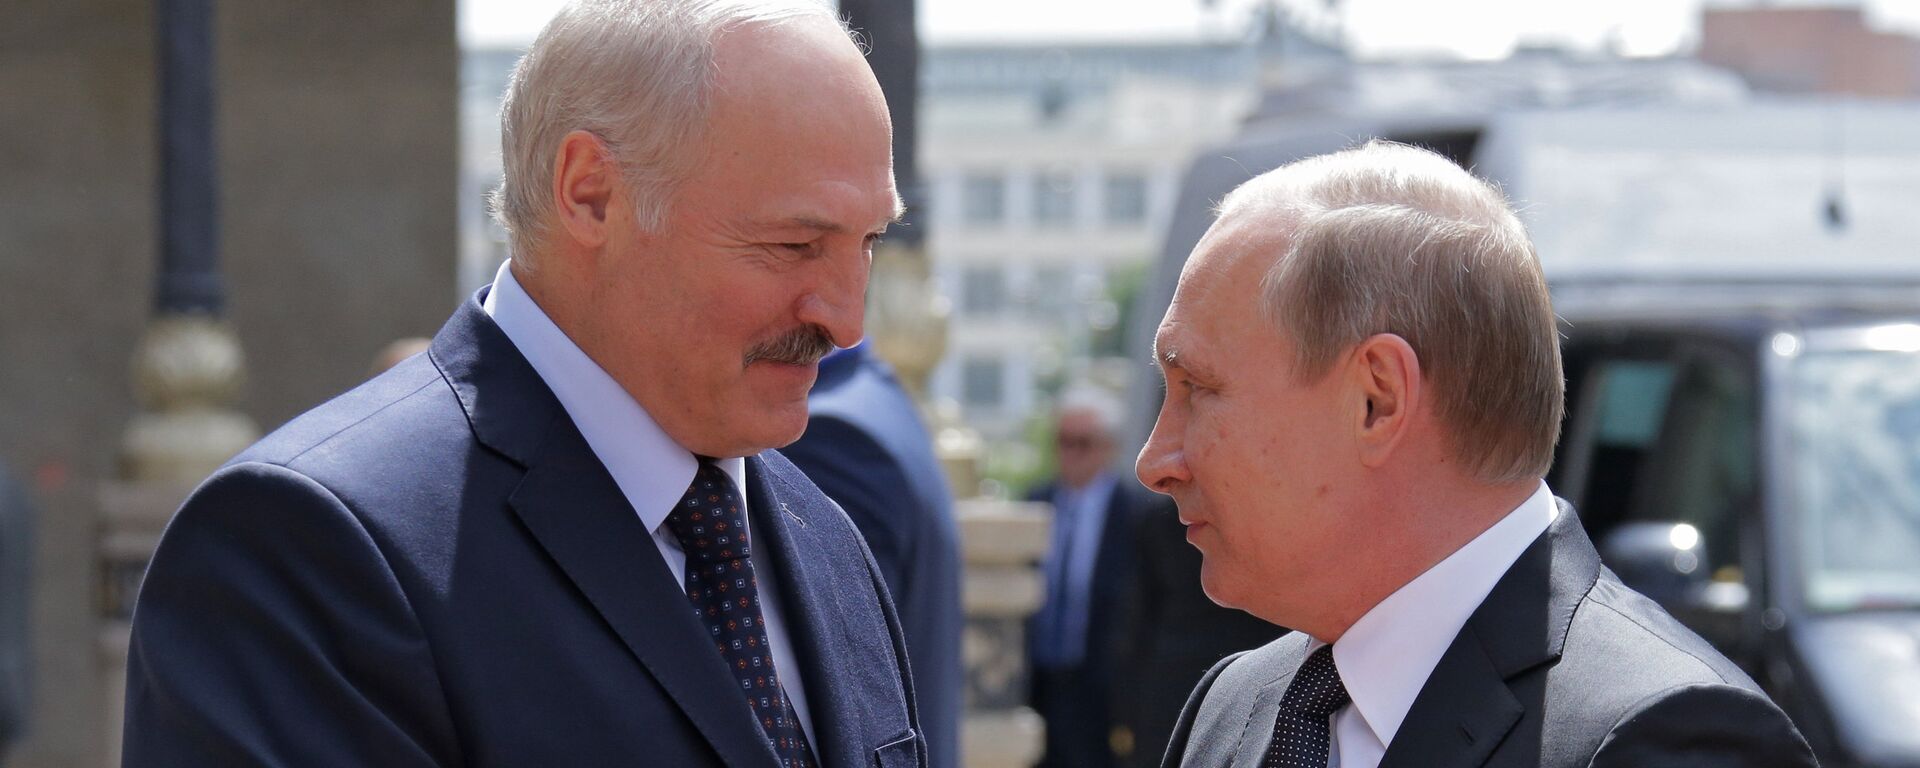 Президенты России и Беларуси Владимир Путин и Александр Лукашенко - Sputnik Latvija, 1920, 14.09.2021